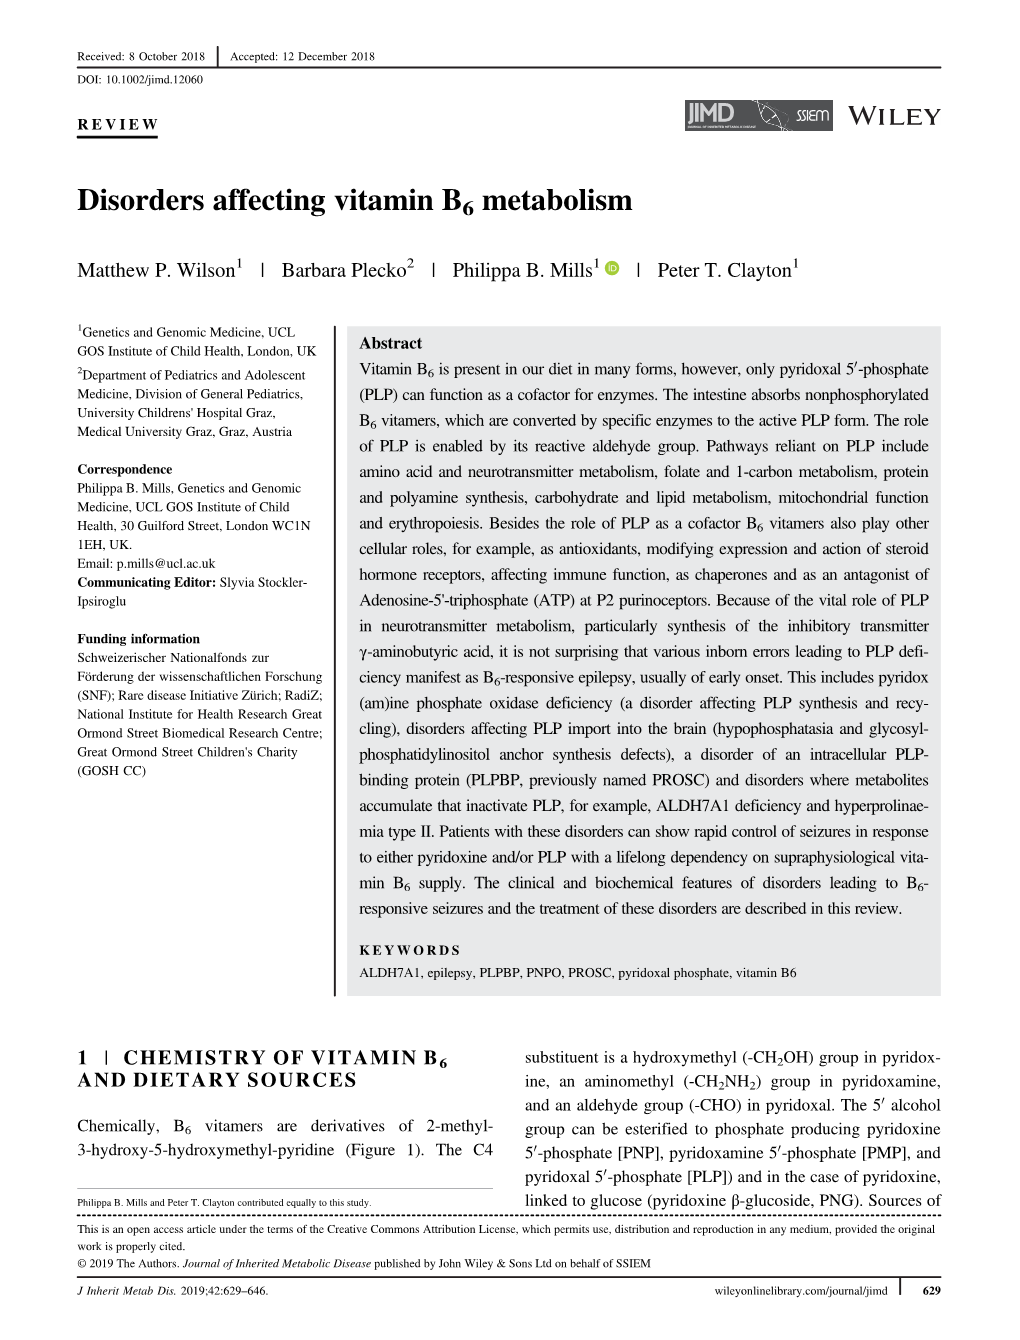 Disorders Affecting Vitamin B6 Metabolism